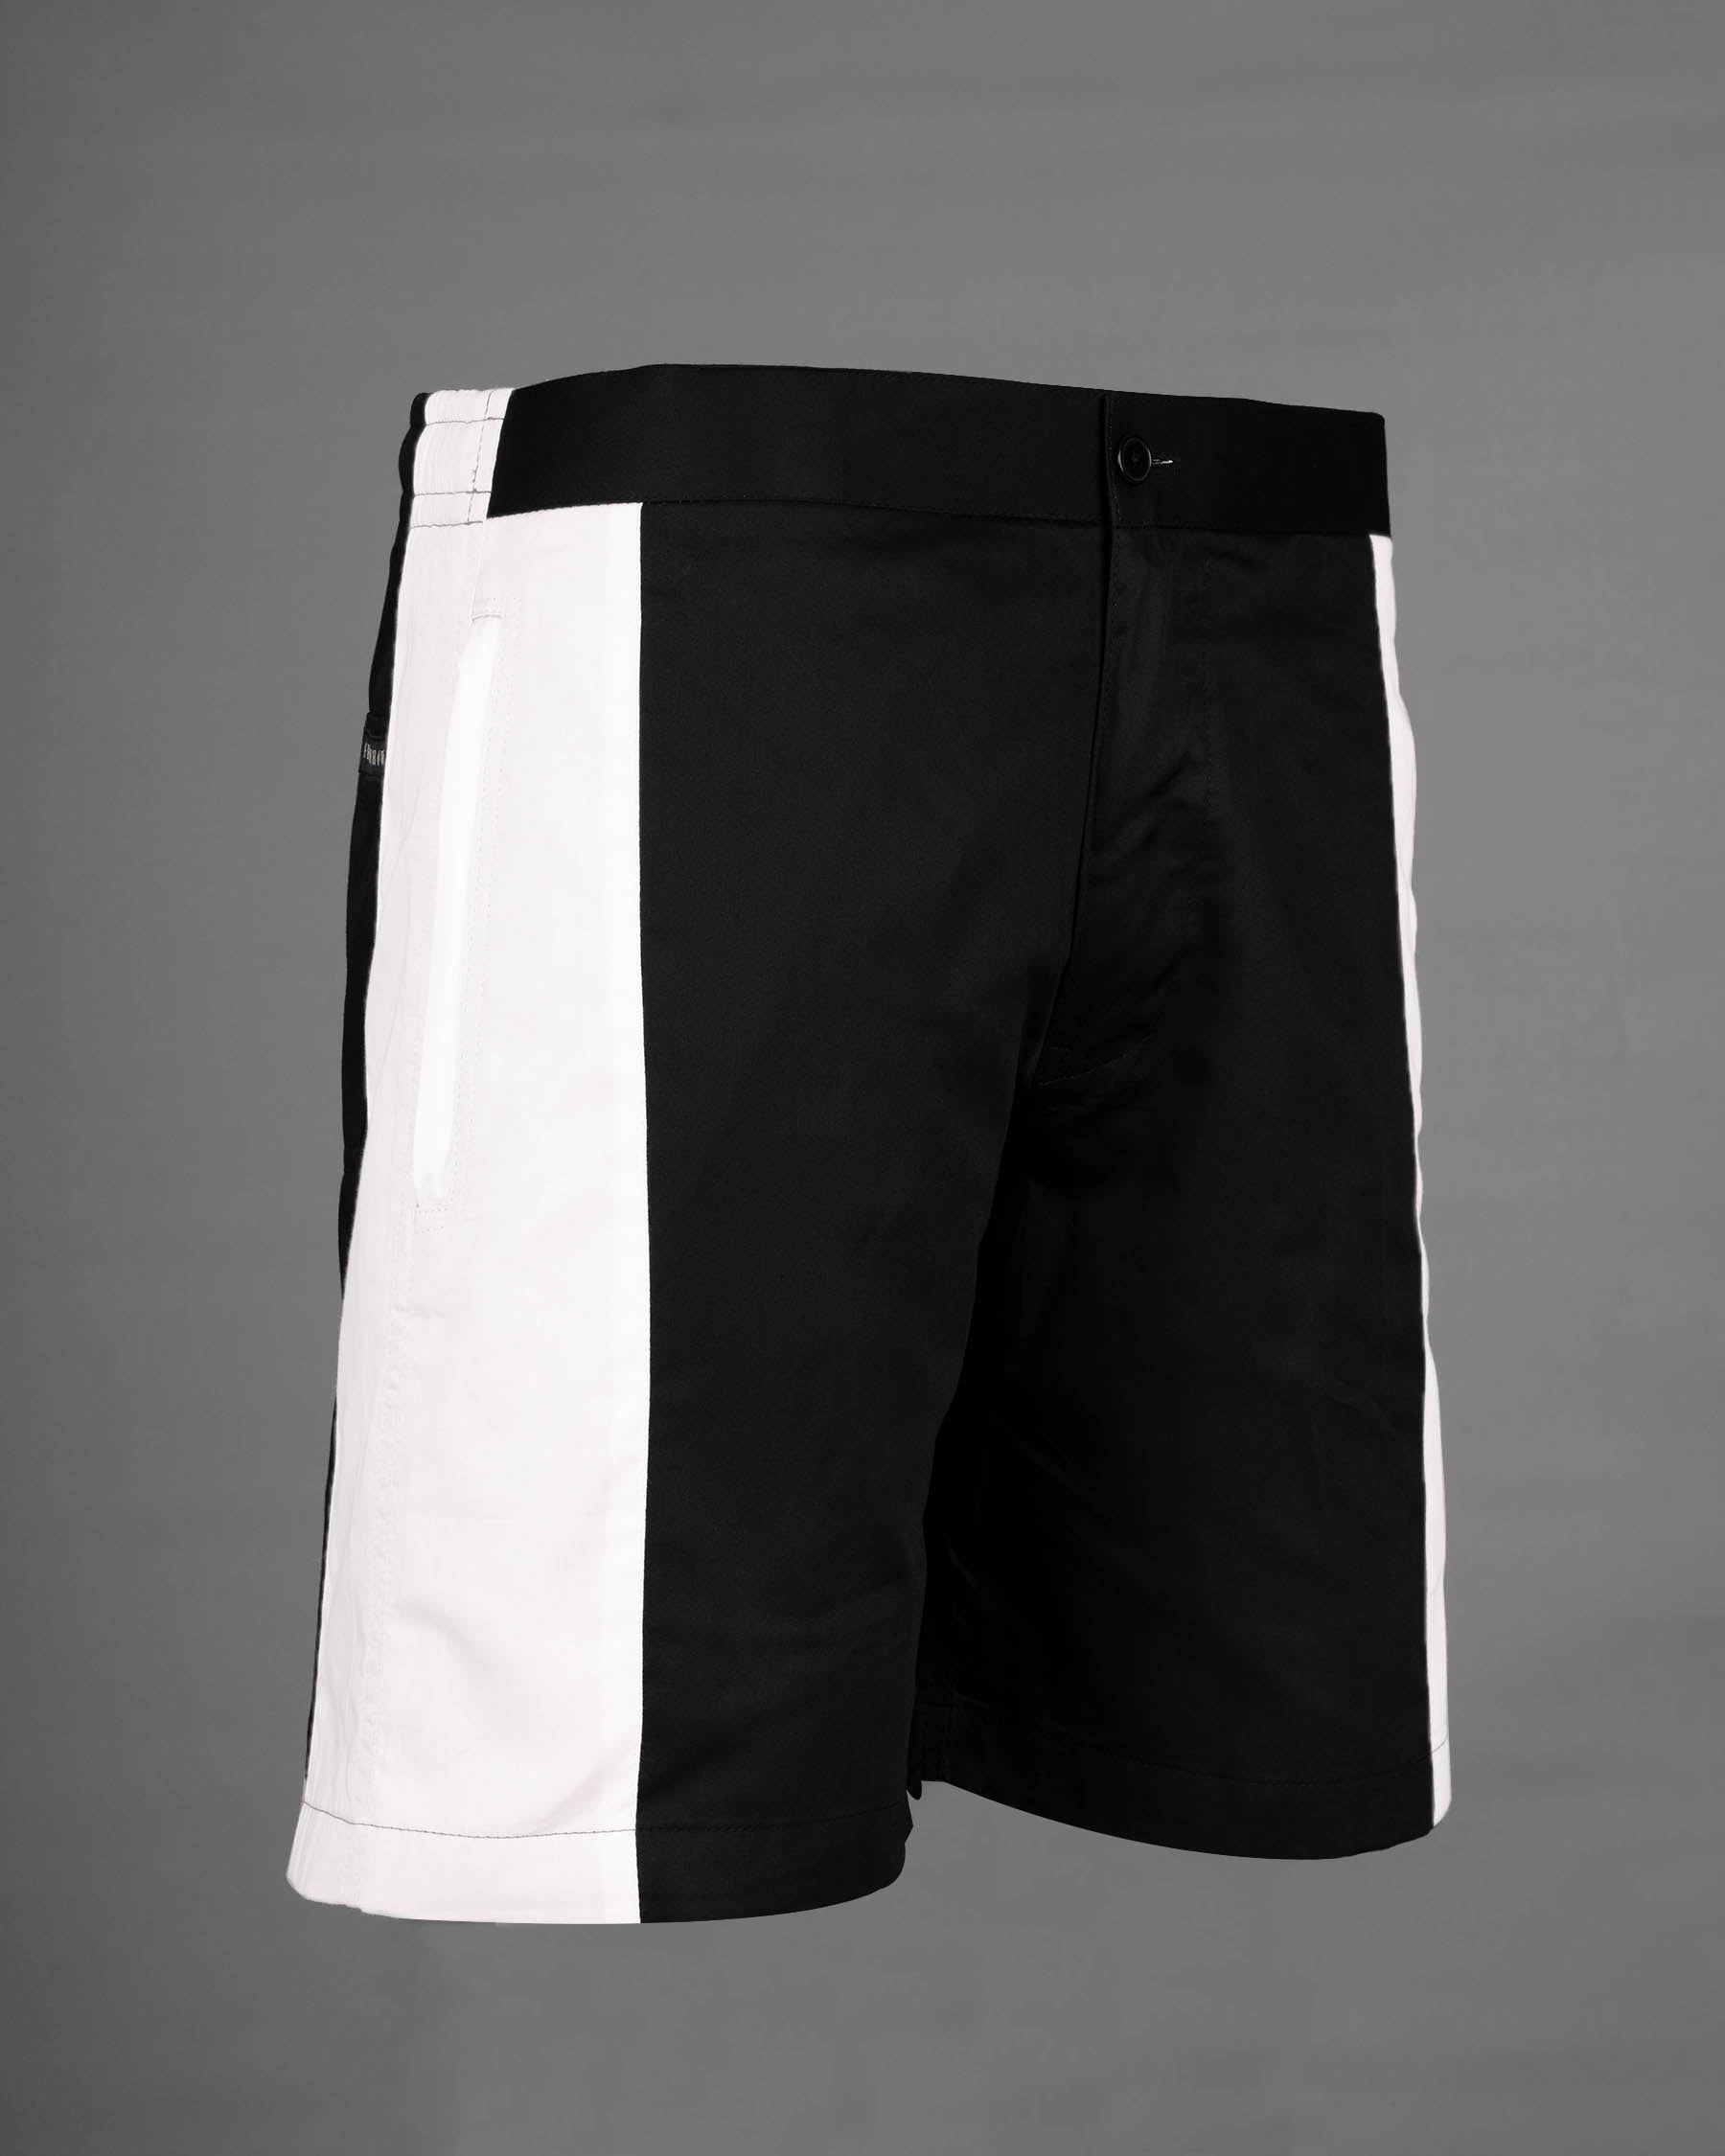 Jade Black and White Super Soft Premium Cotton Designer Shorts SR149-28, SR149-30, SR149-32, SR149-34, SR149-36, SR149-38, SR149-40, SR149-42, SR149-44